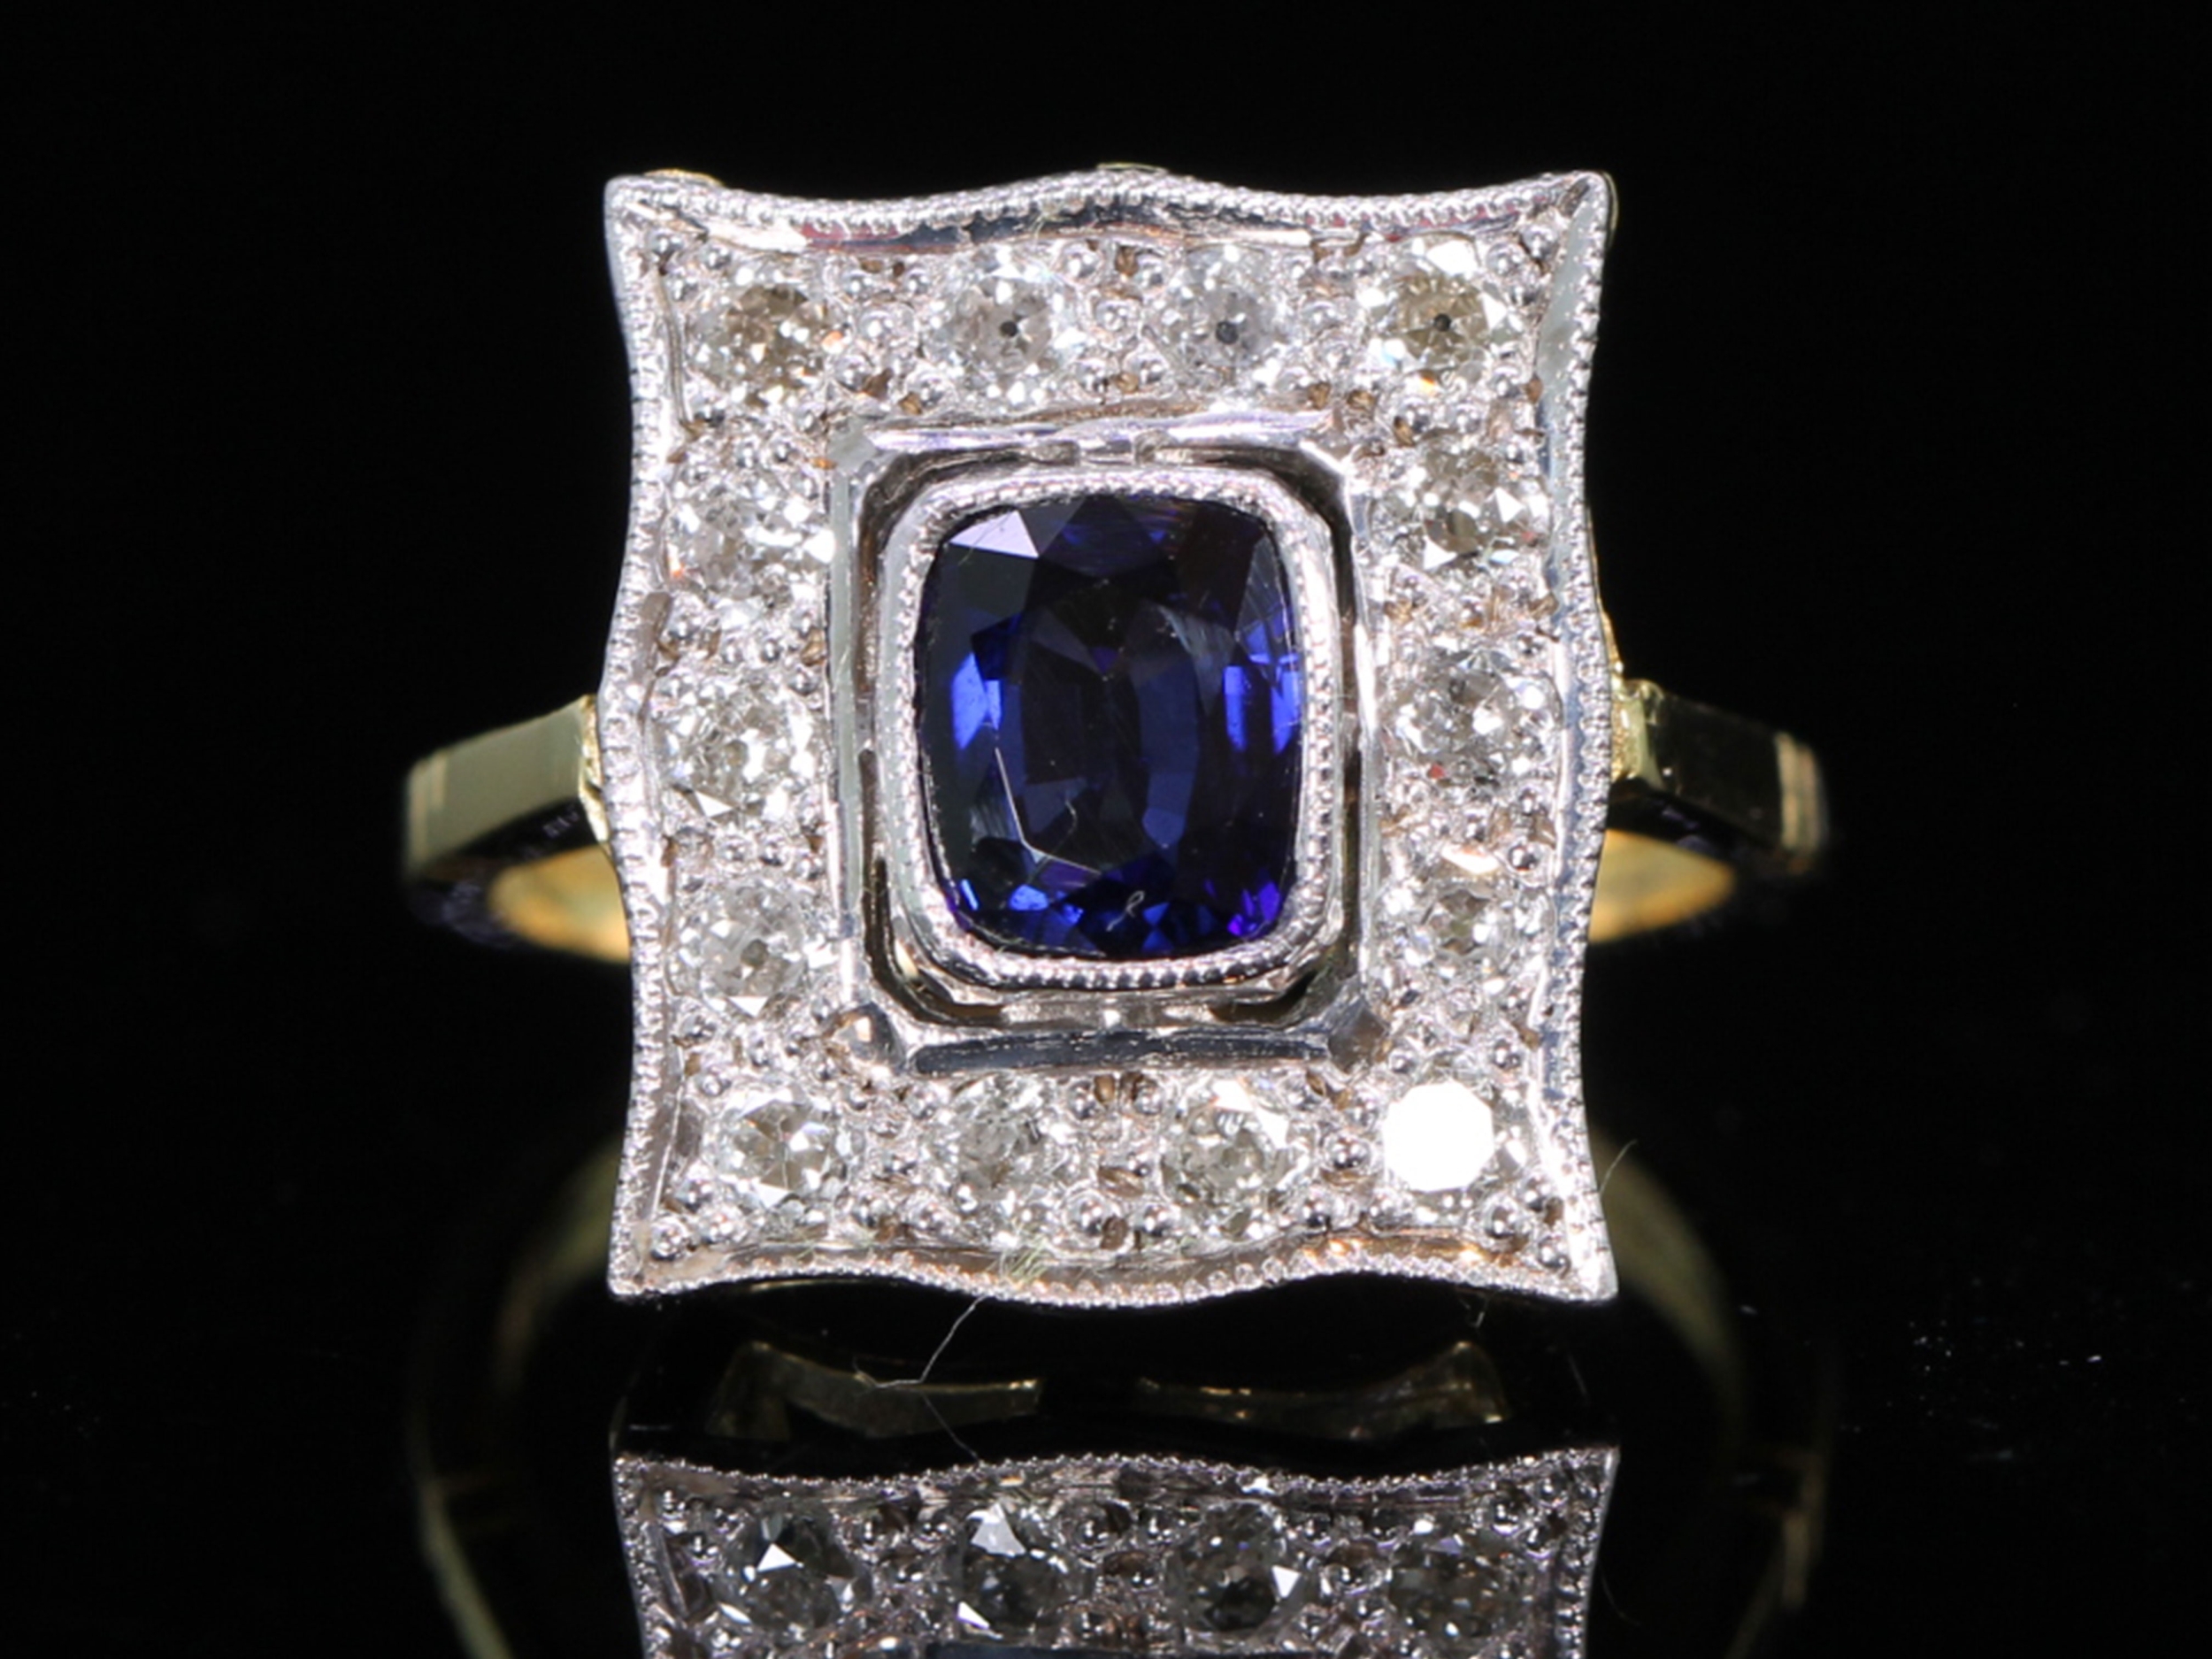 Stunning sapphire and diamond 18ct gold ring